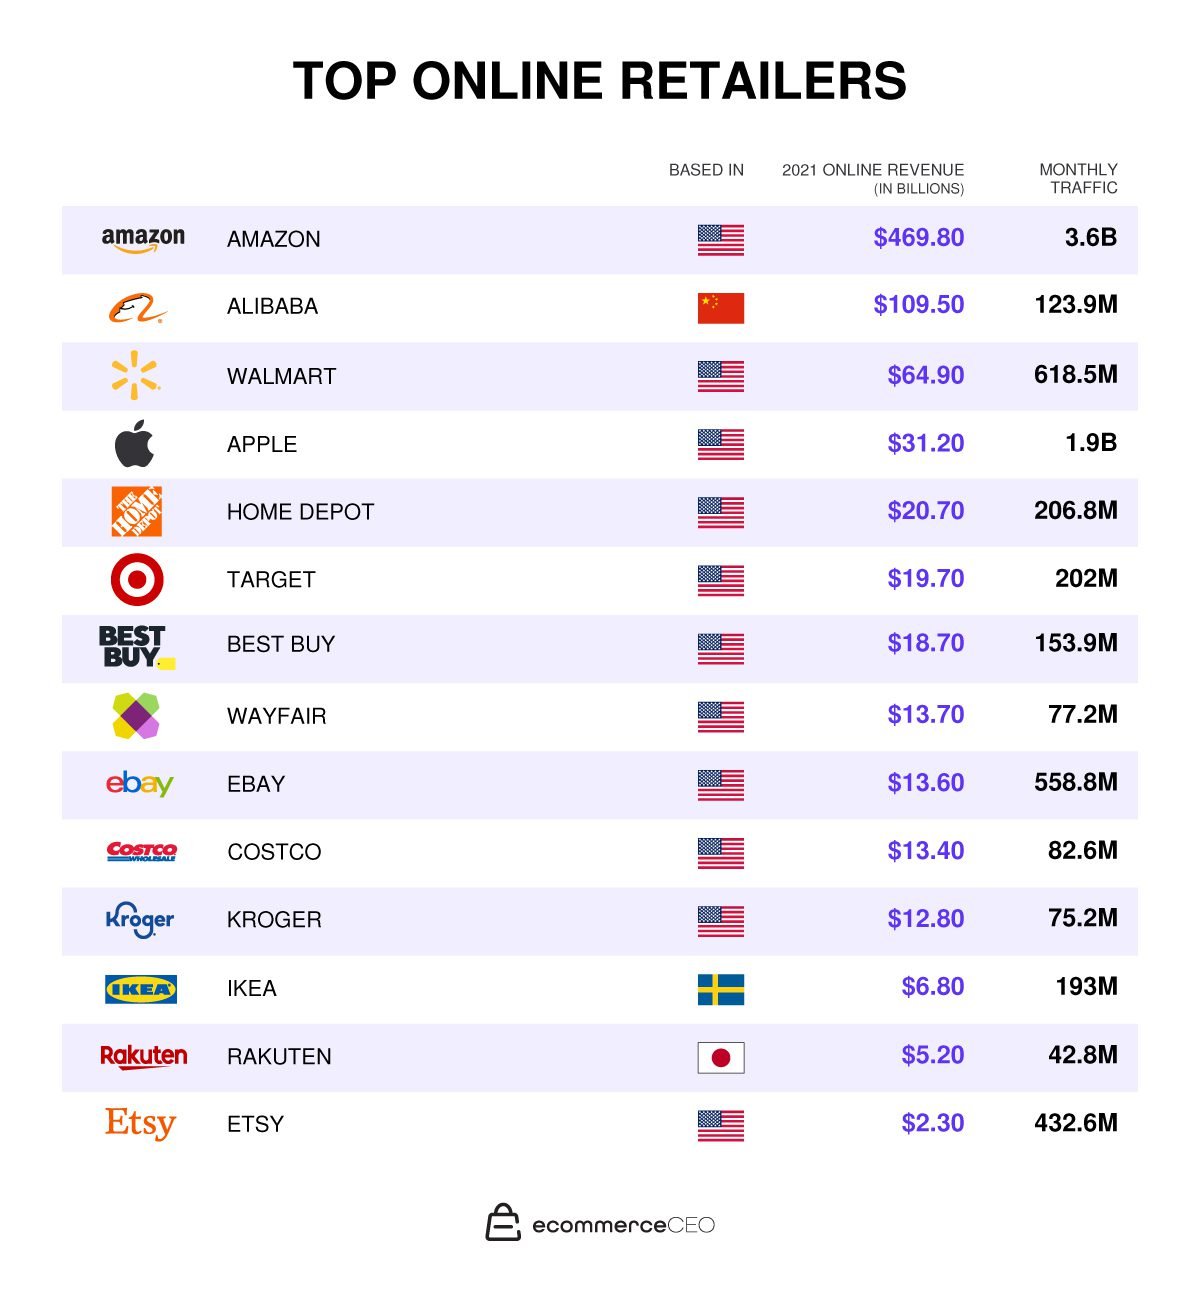 Top Online Retailers By Sales